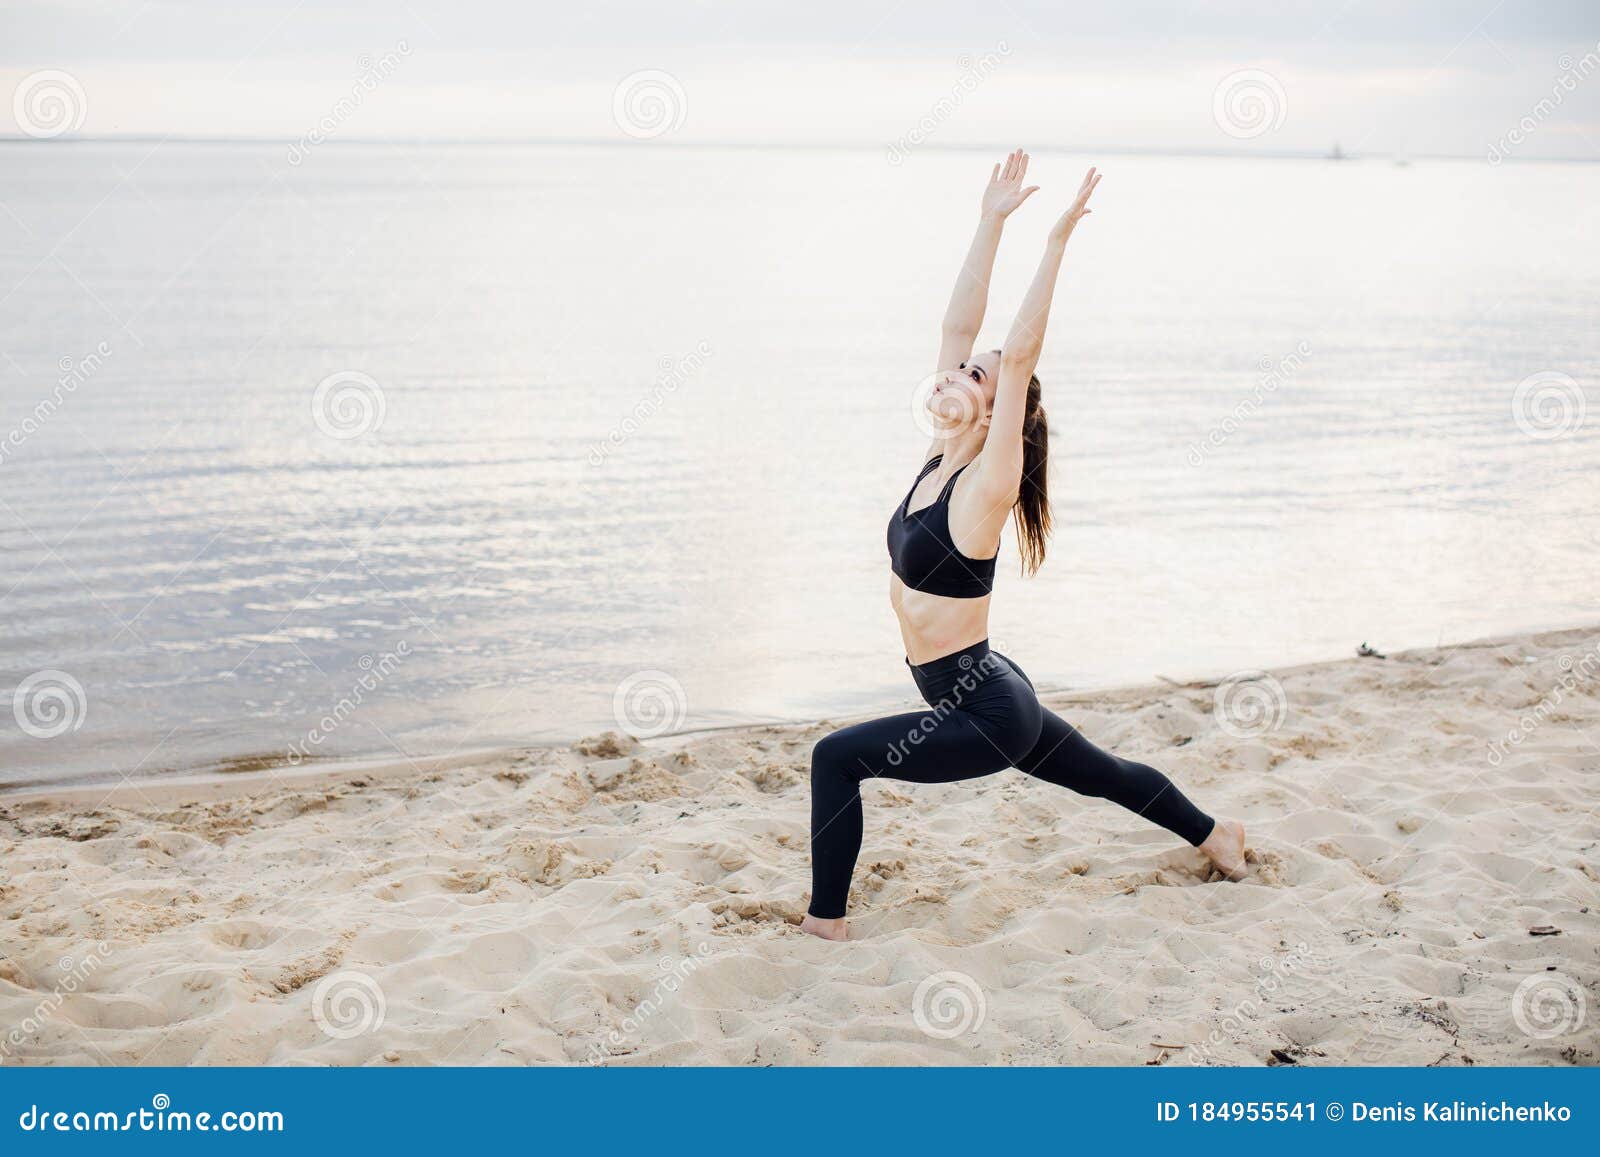 30,767 Beautiful Woman Beach Yoga Stock Photos - Free & Royalty